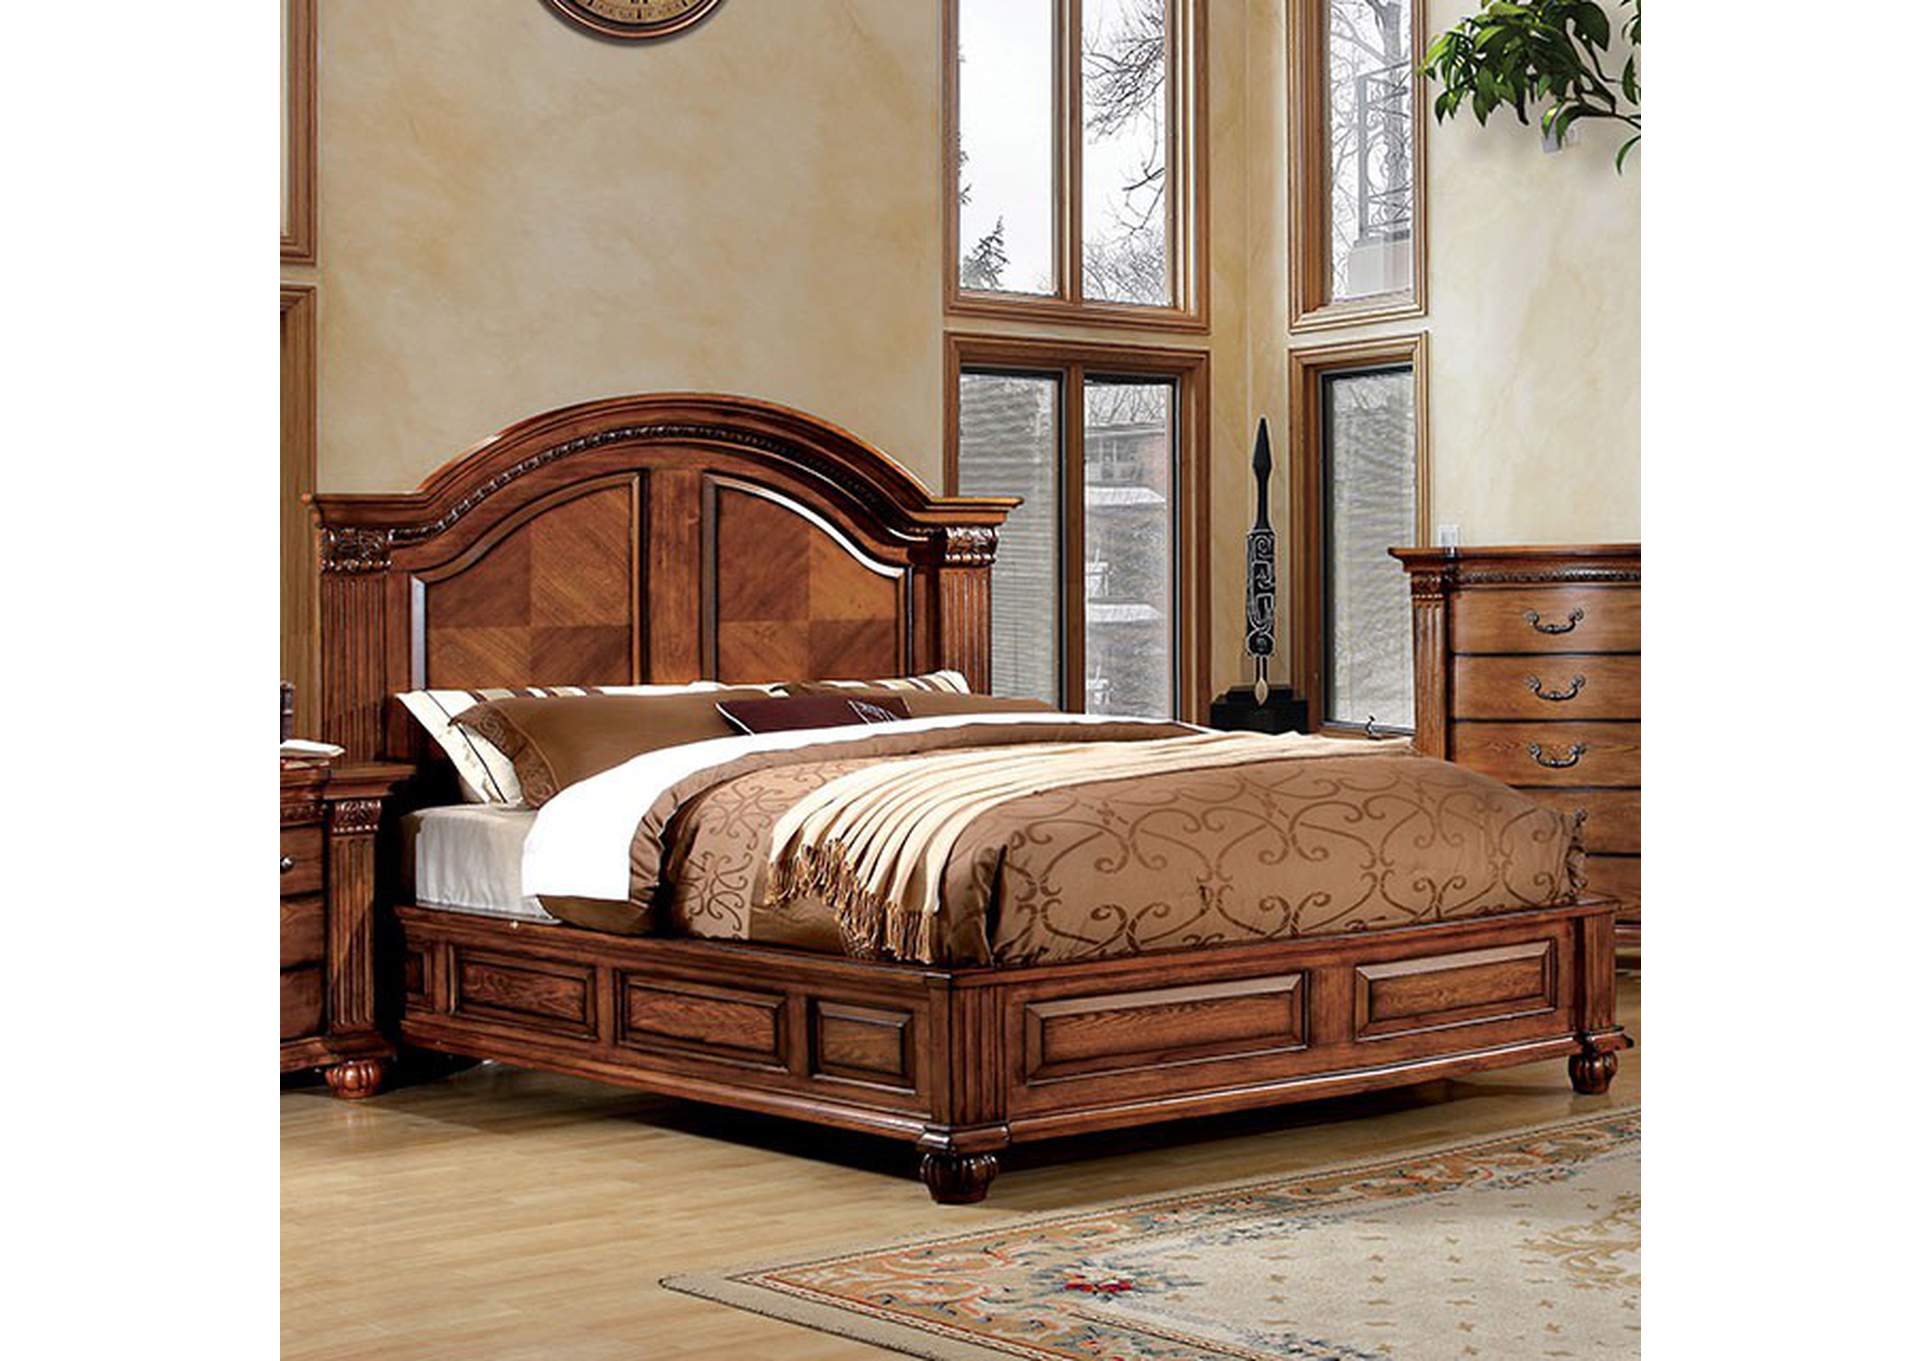 Bellagrand Queen Bed,Furniture of America